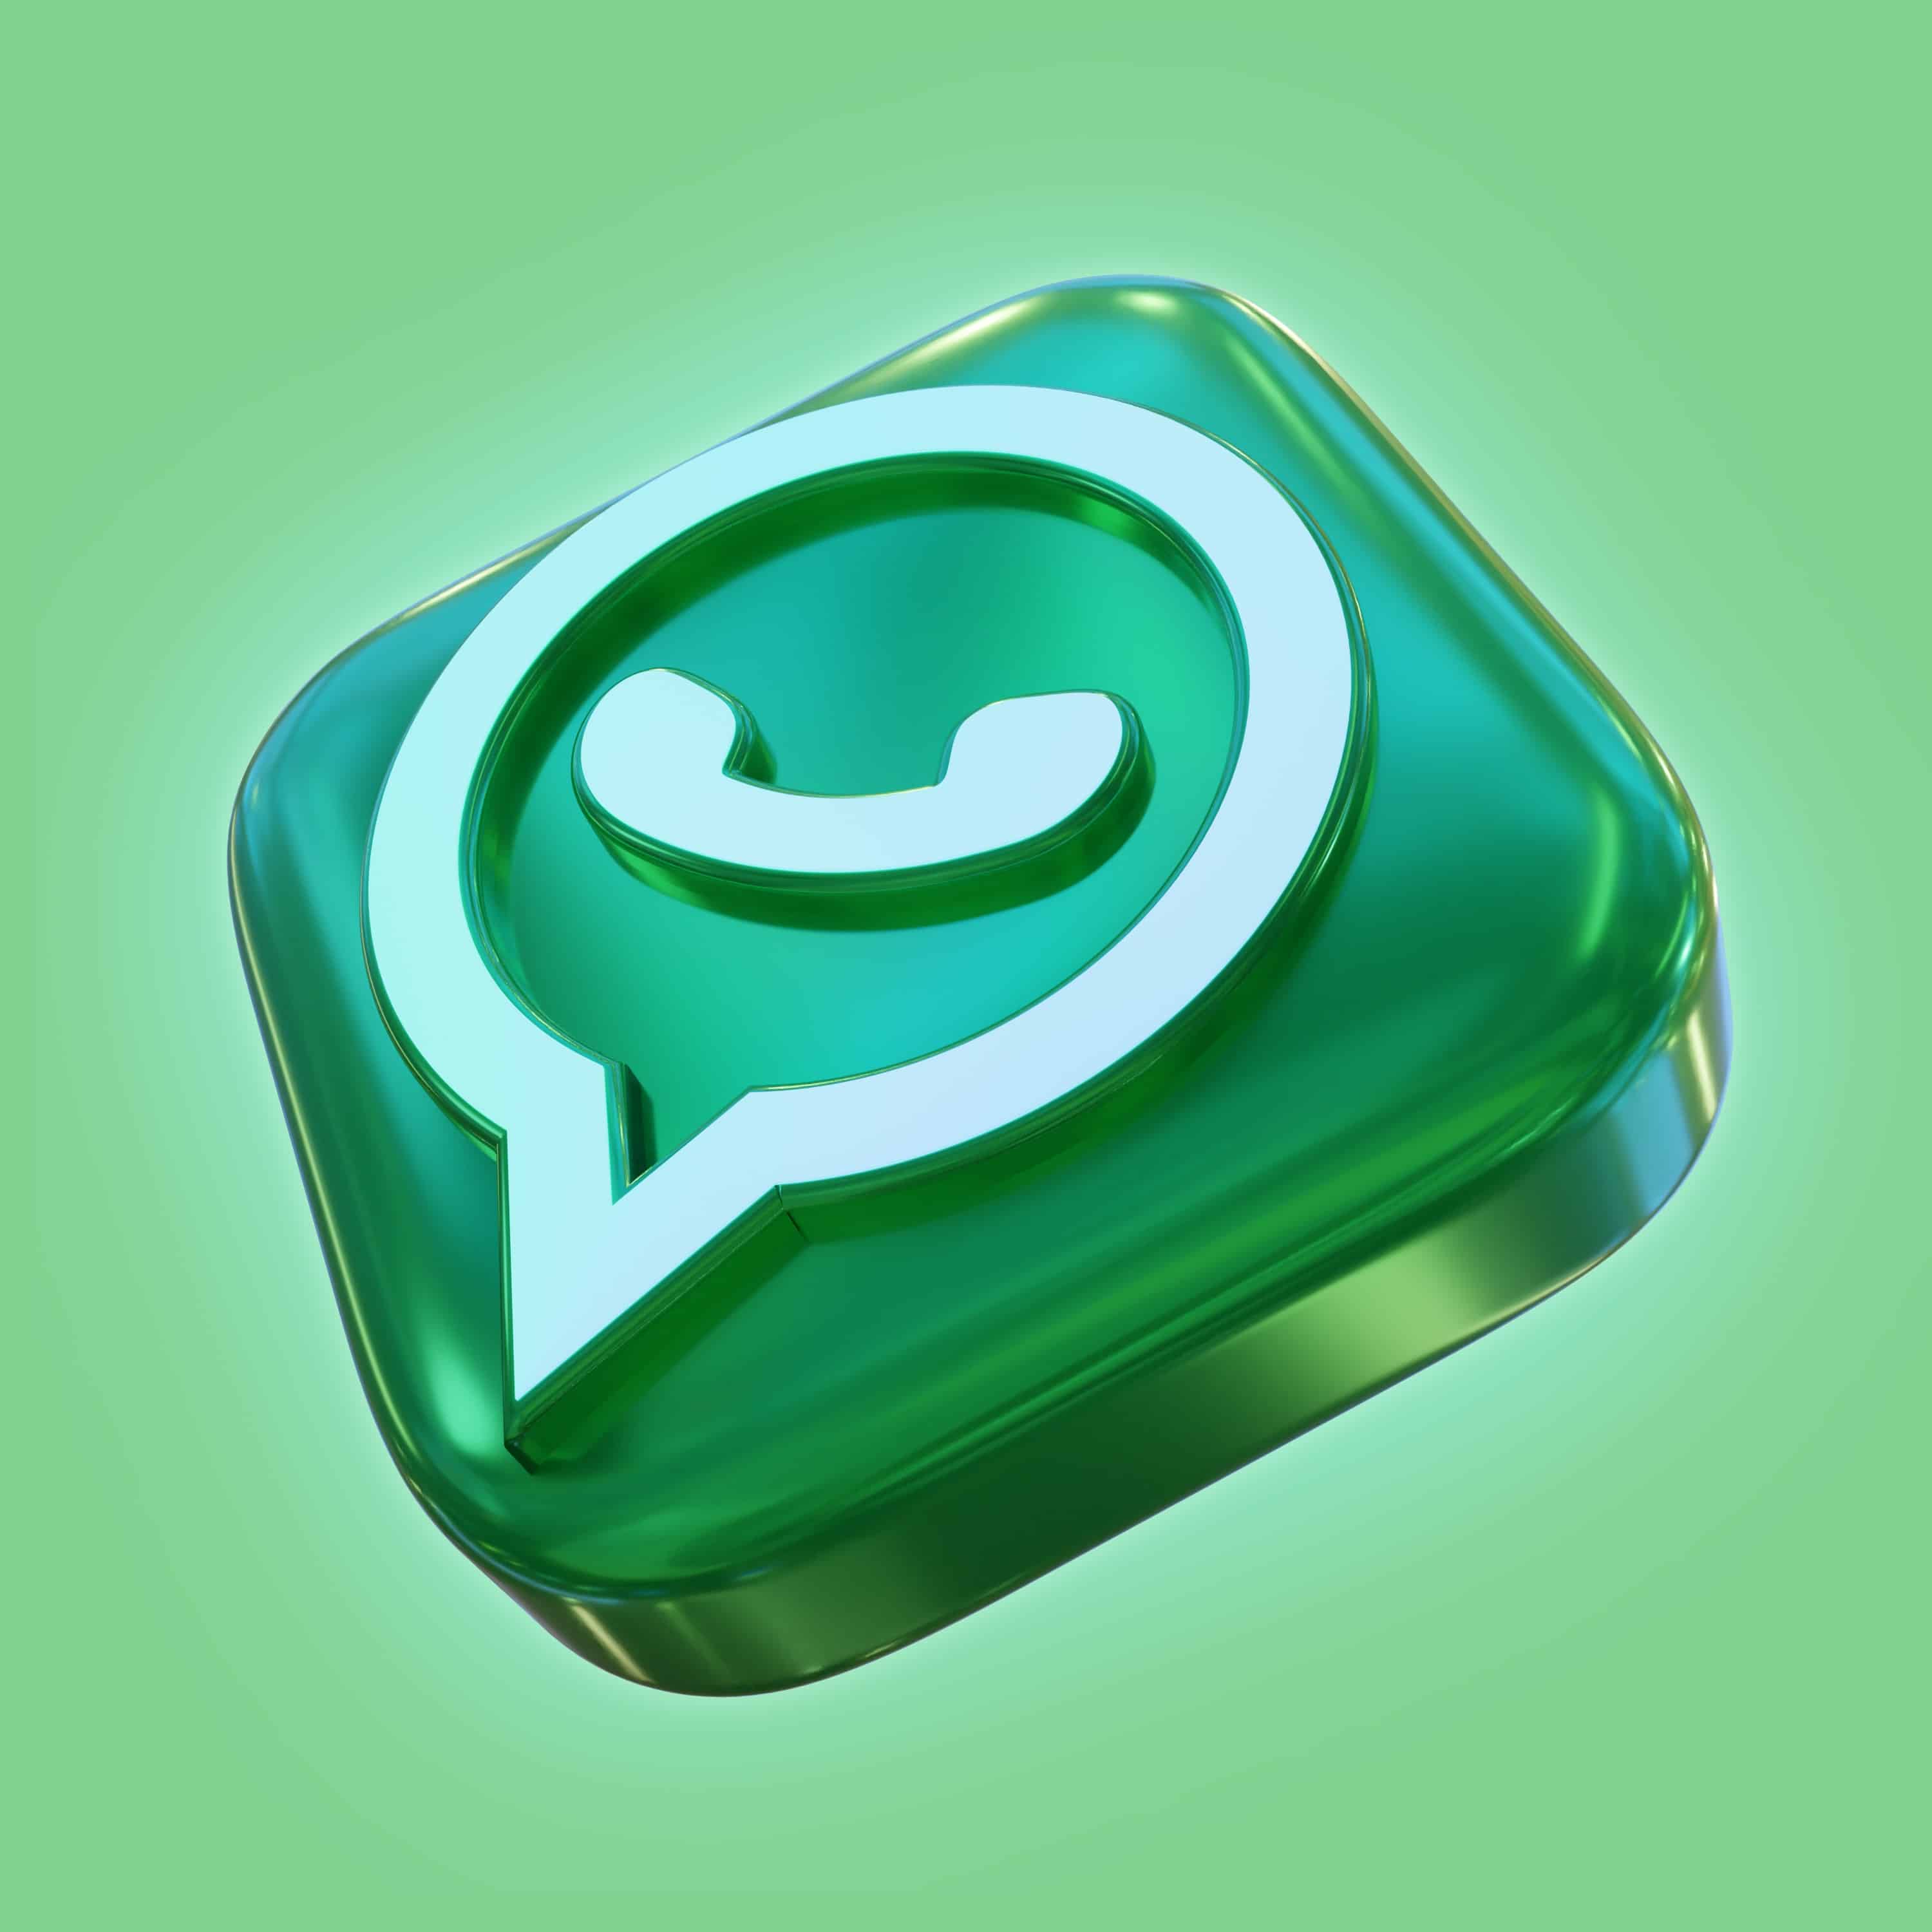 WhatsApp: como buscar e enviar GIFs nativamente [iPhone, Mac e web] -  MacMagazine